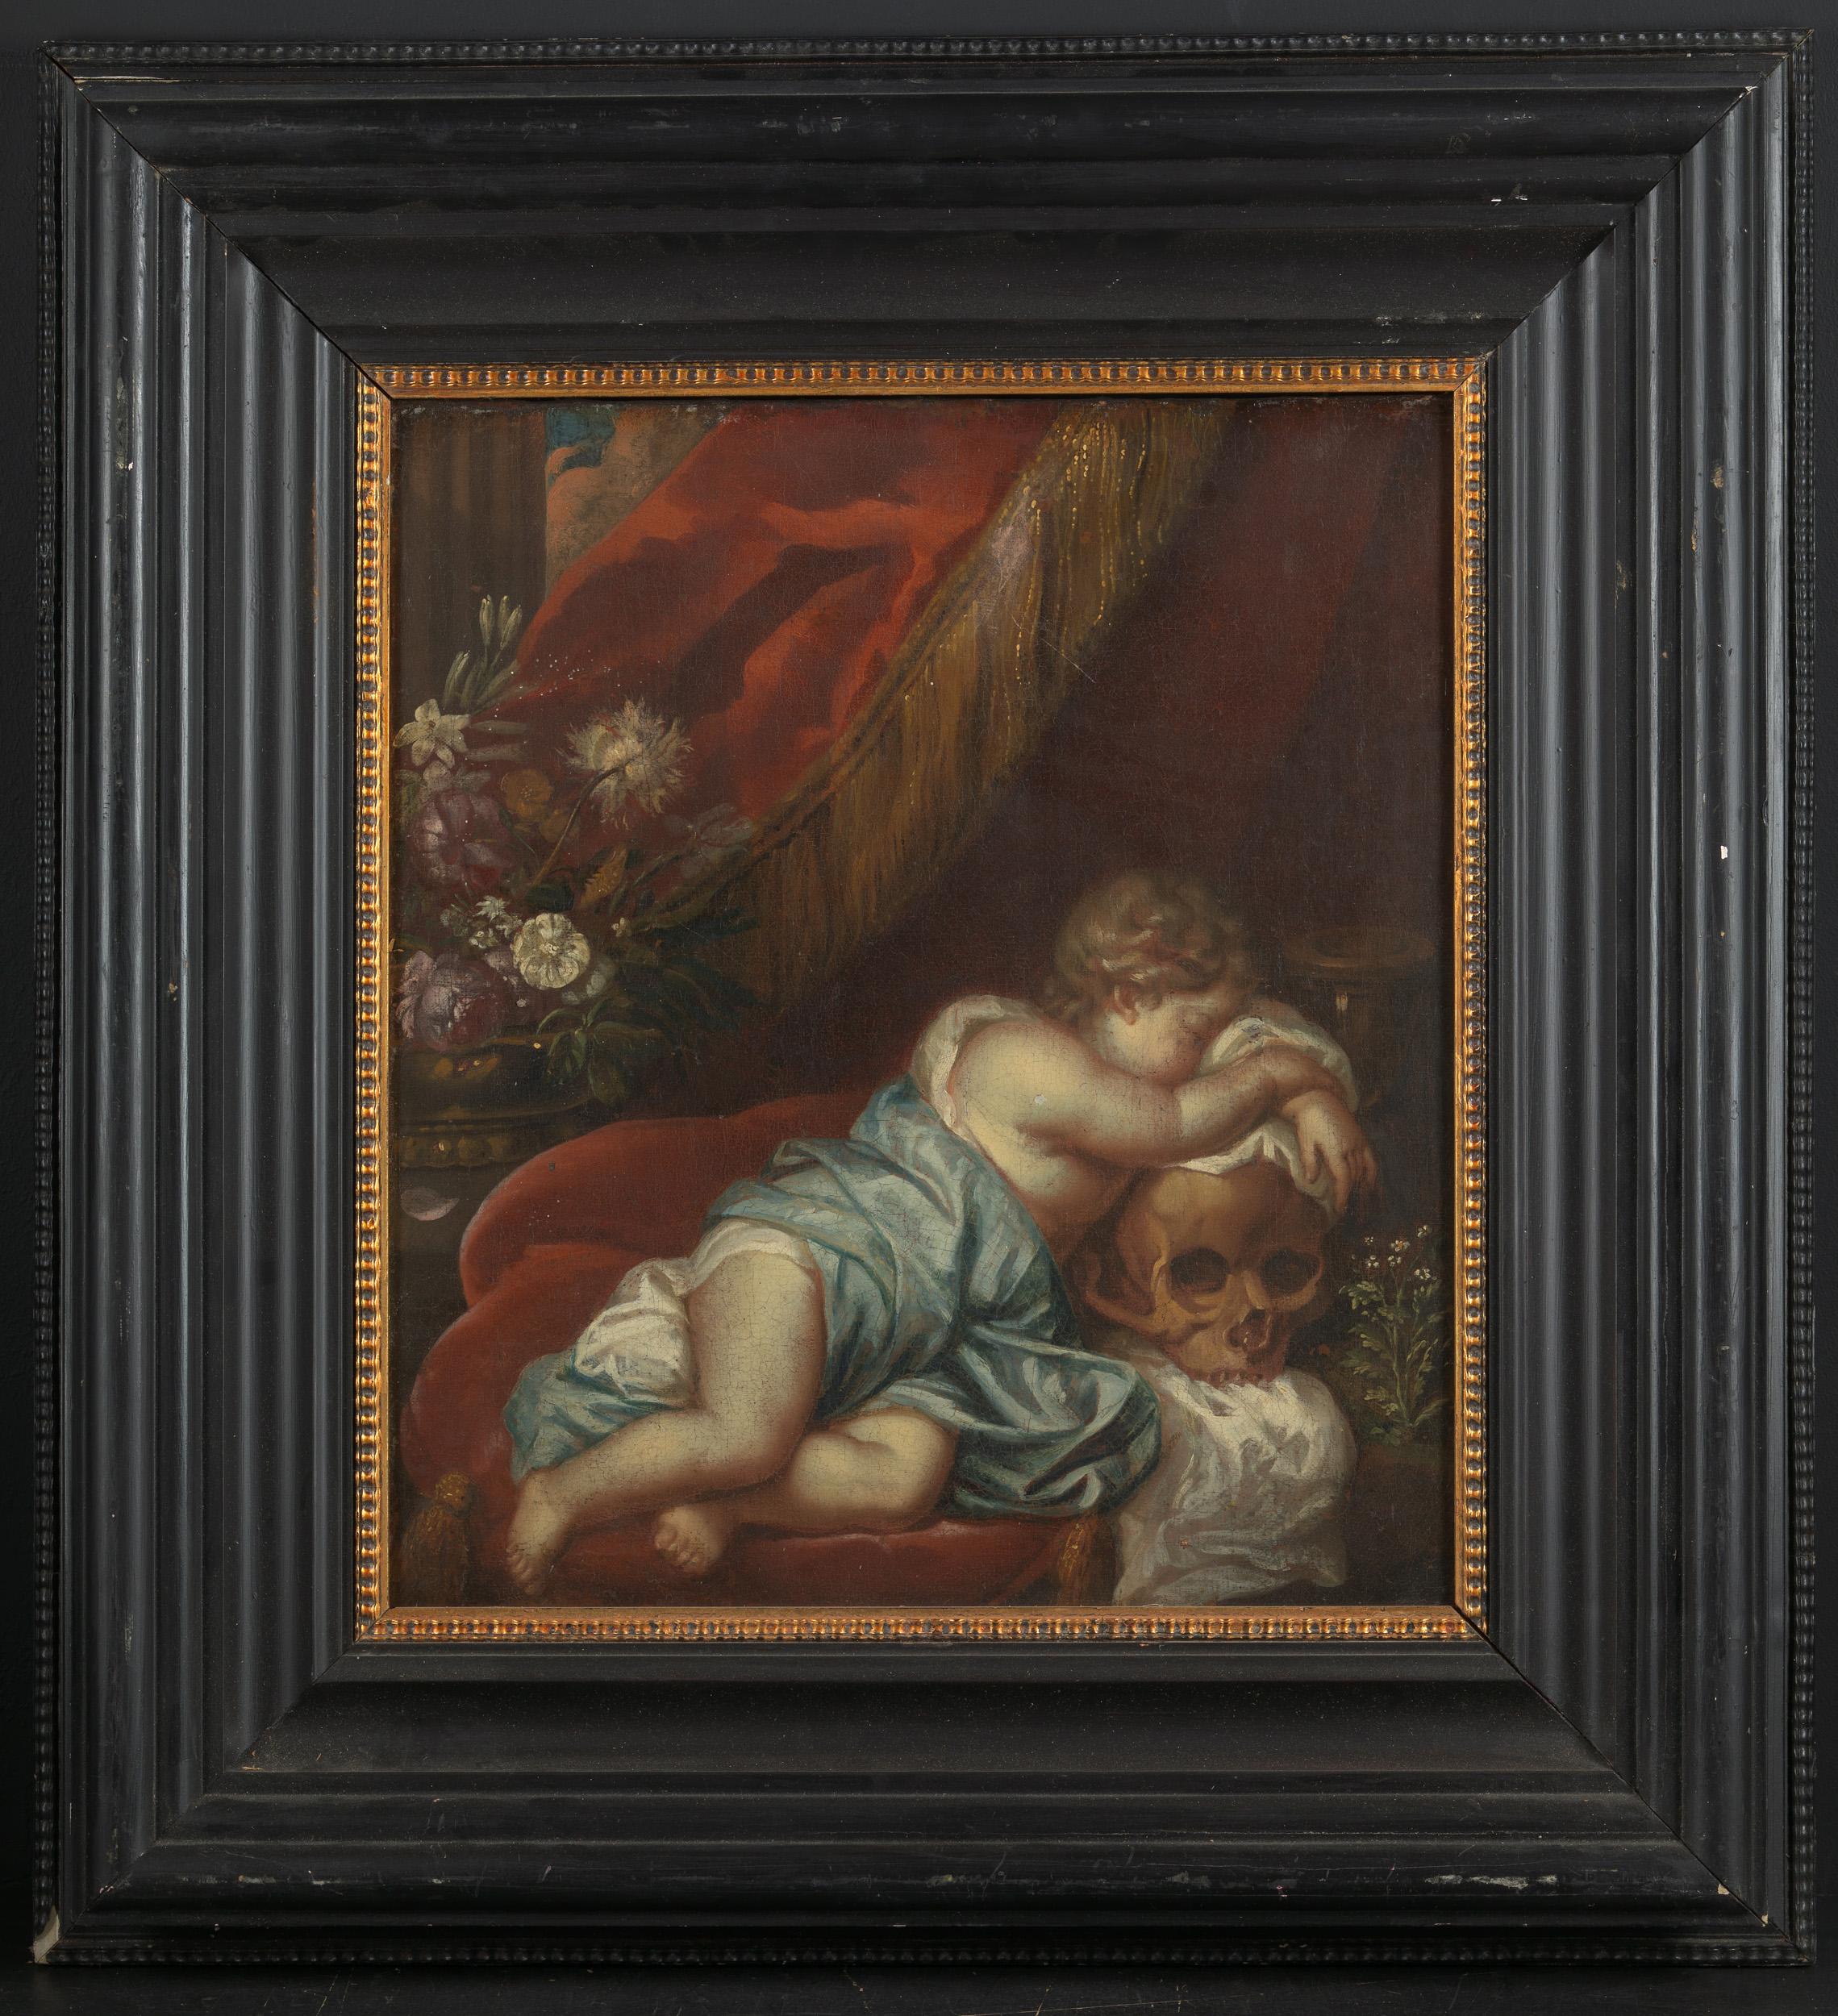 Unknown Figurative Painting - 18th C, Late Baroque Style, Still Life, Dutch School, Vanitas Scene with Cherub